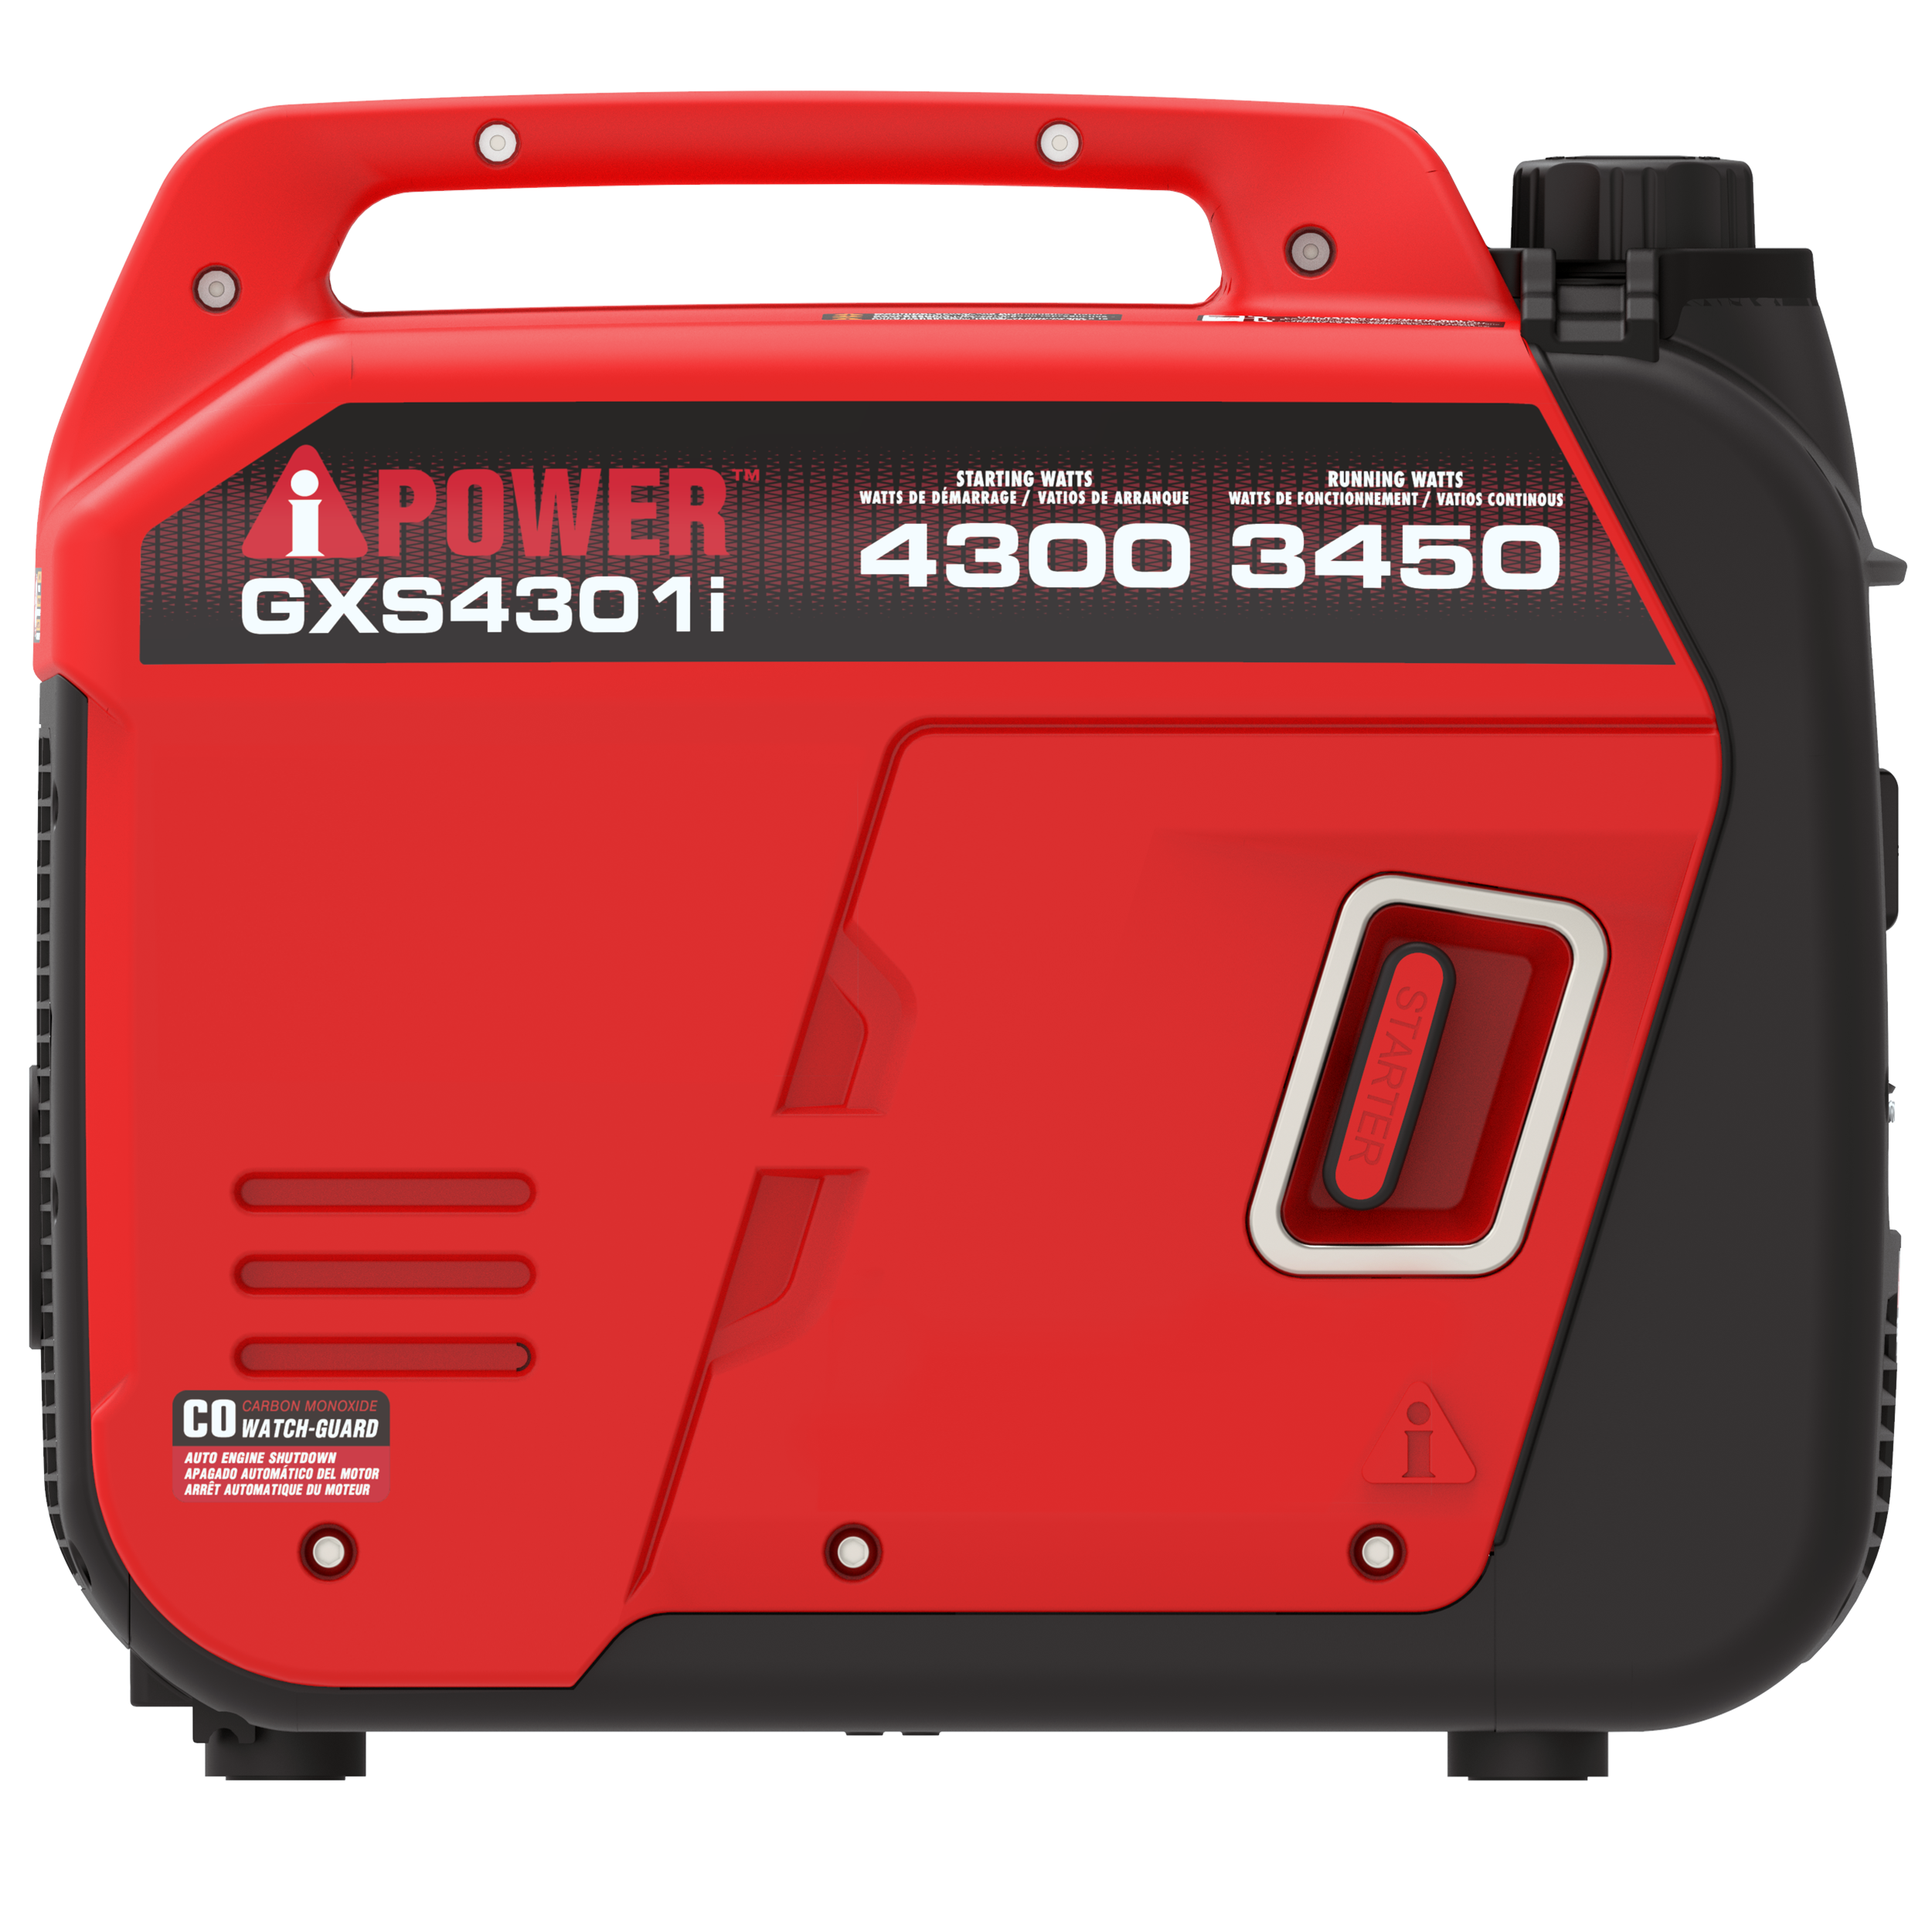 GXS4301i - Inverter Generator